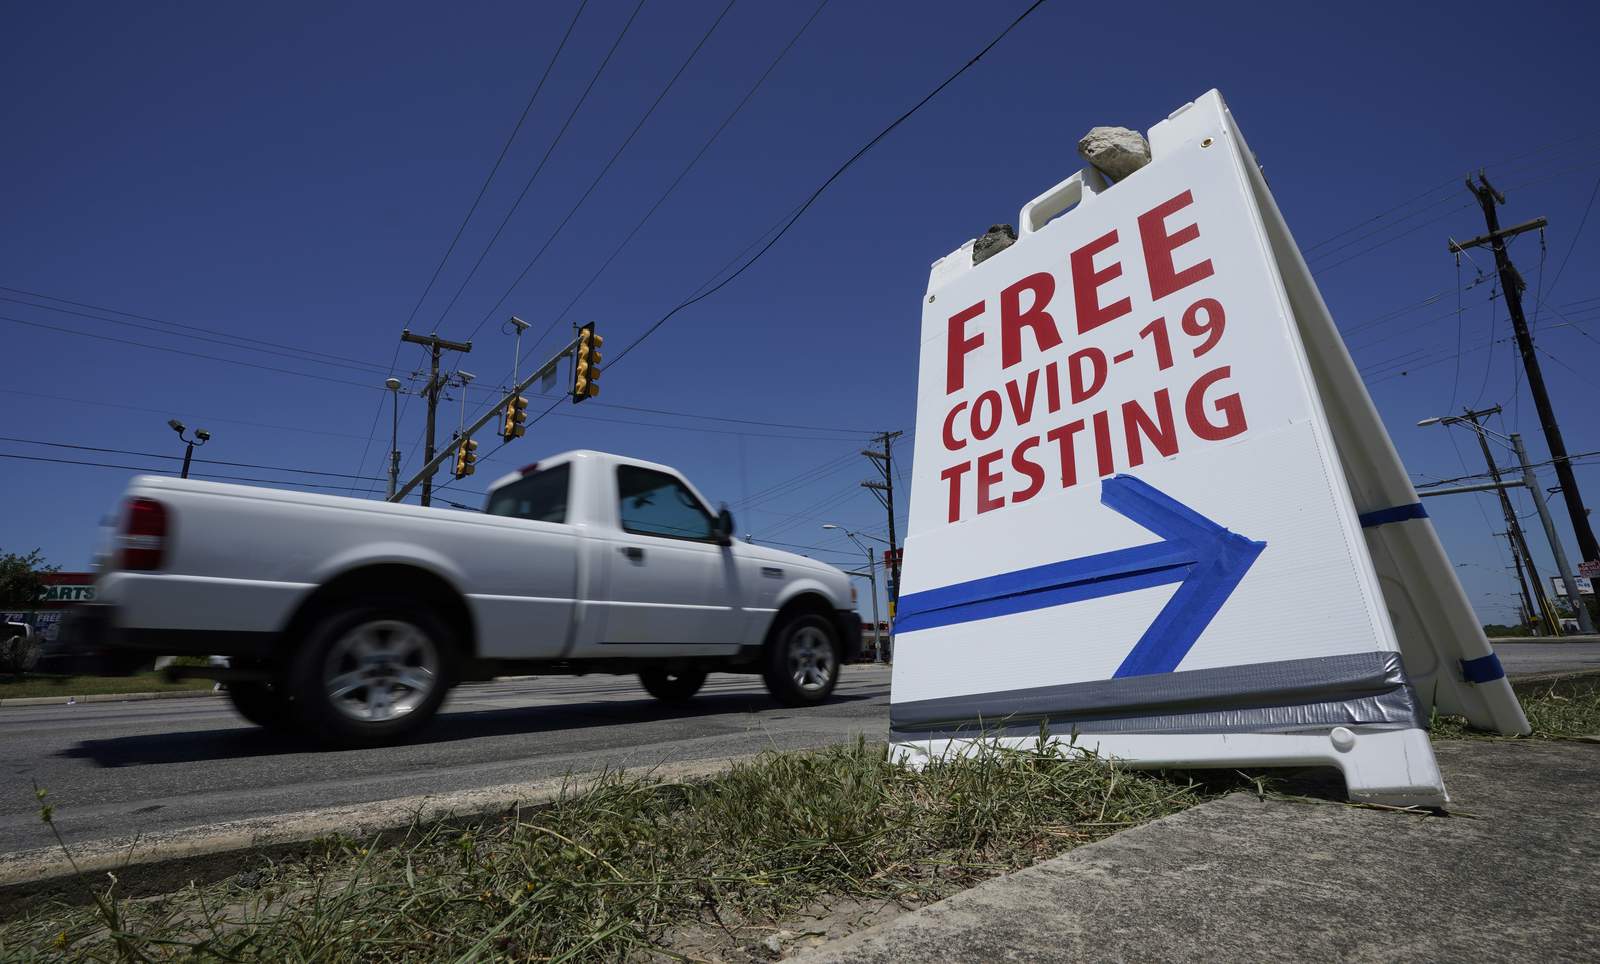 Washtenaw County to offer free COVID-19 testing in Ypsilanti Sept. 26